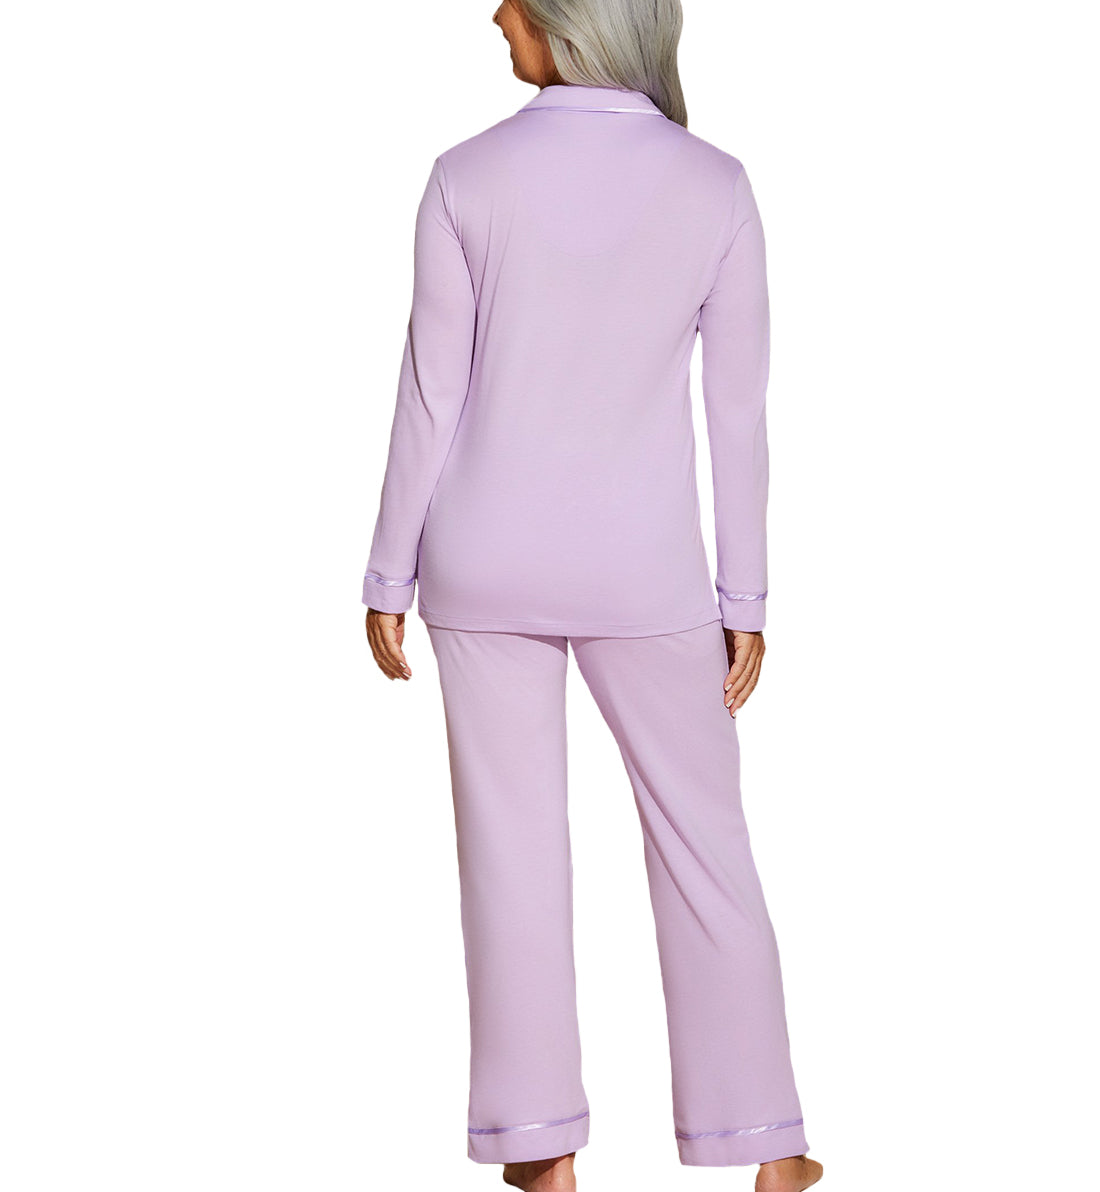 Cosabella Bella Long Sleeve Top & Pant PJ Set (AMORE9644),Small,Icy Violet - Icy Violet,Small